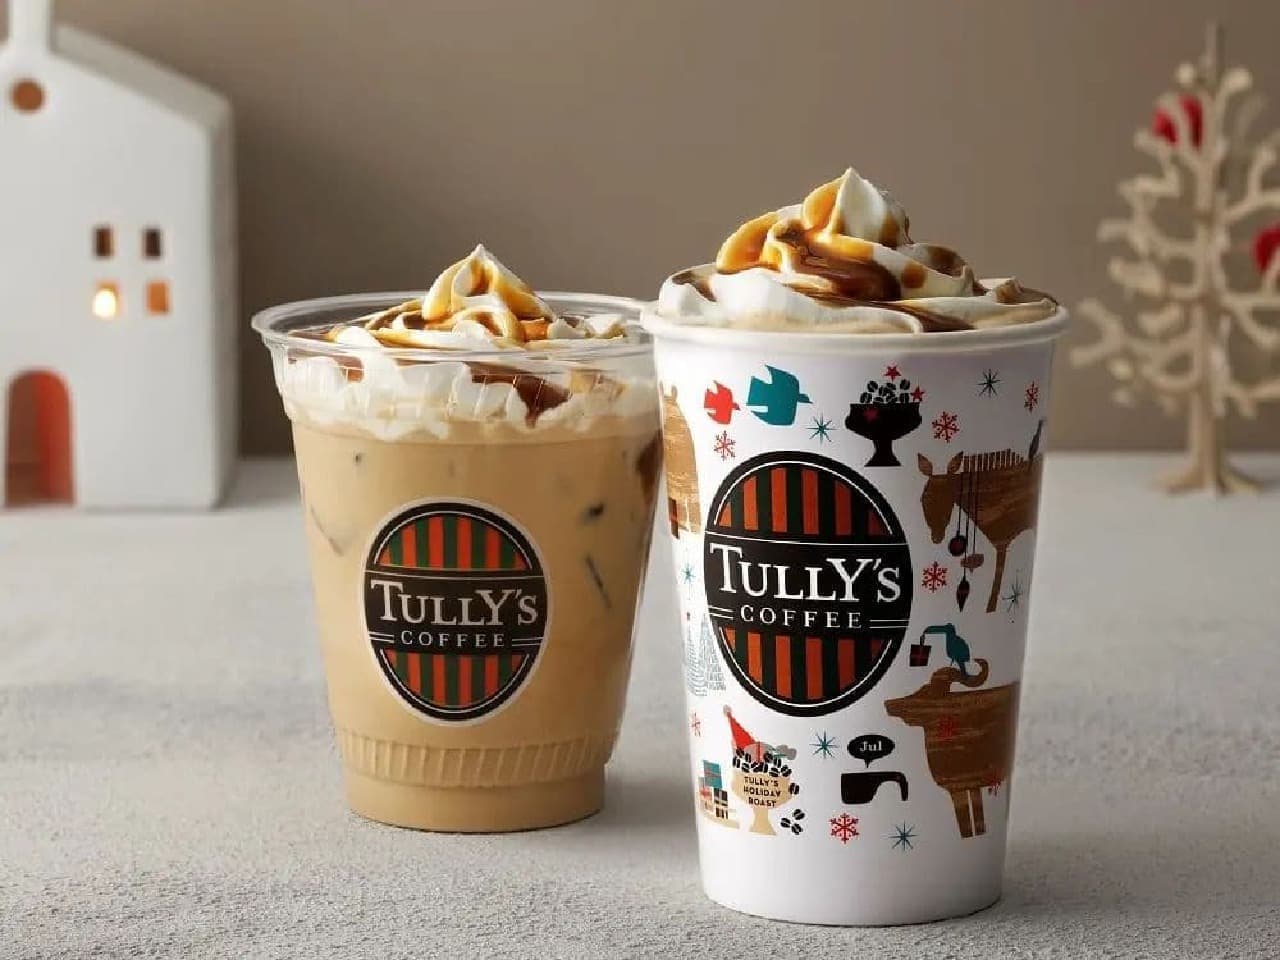 Tully's Coffee "Irish Latte